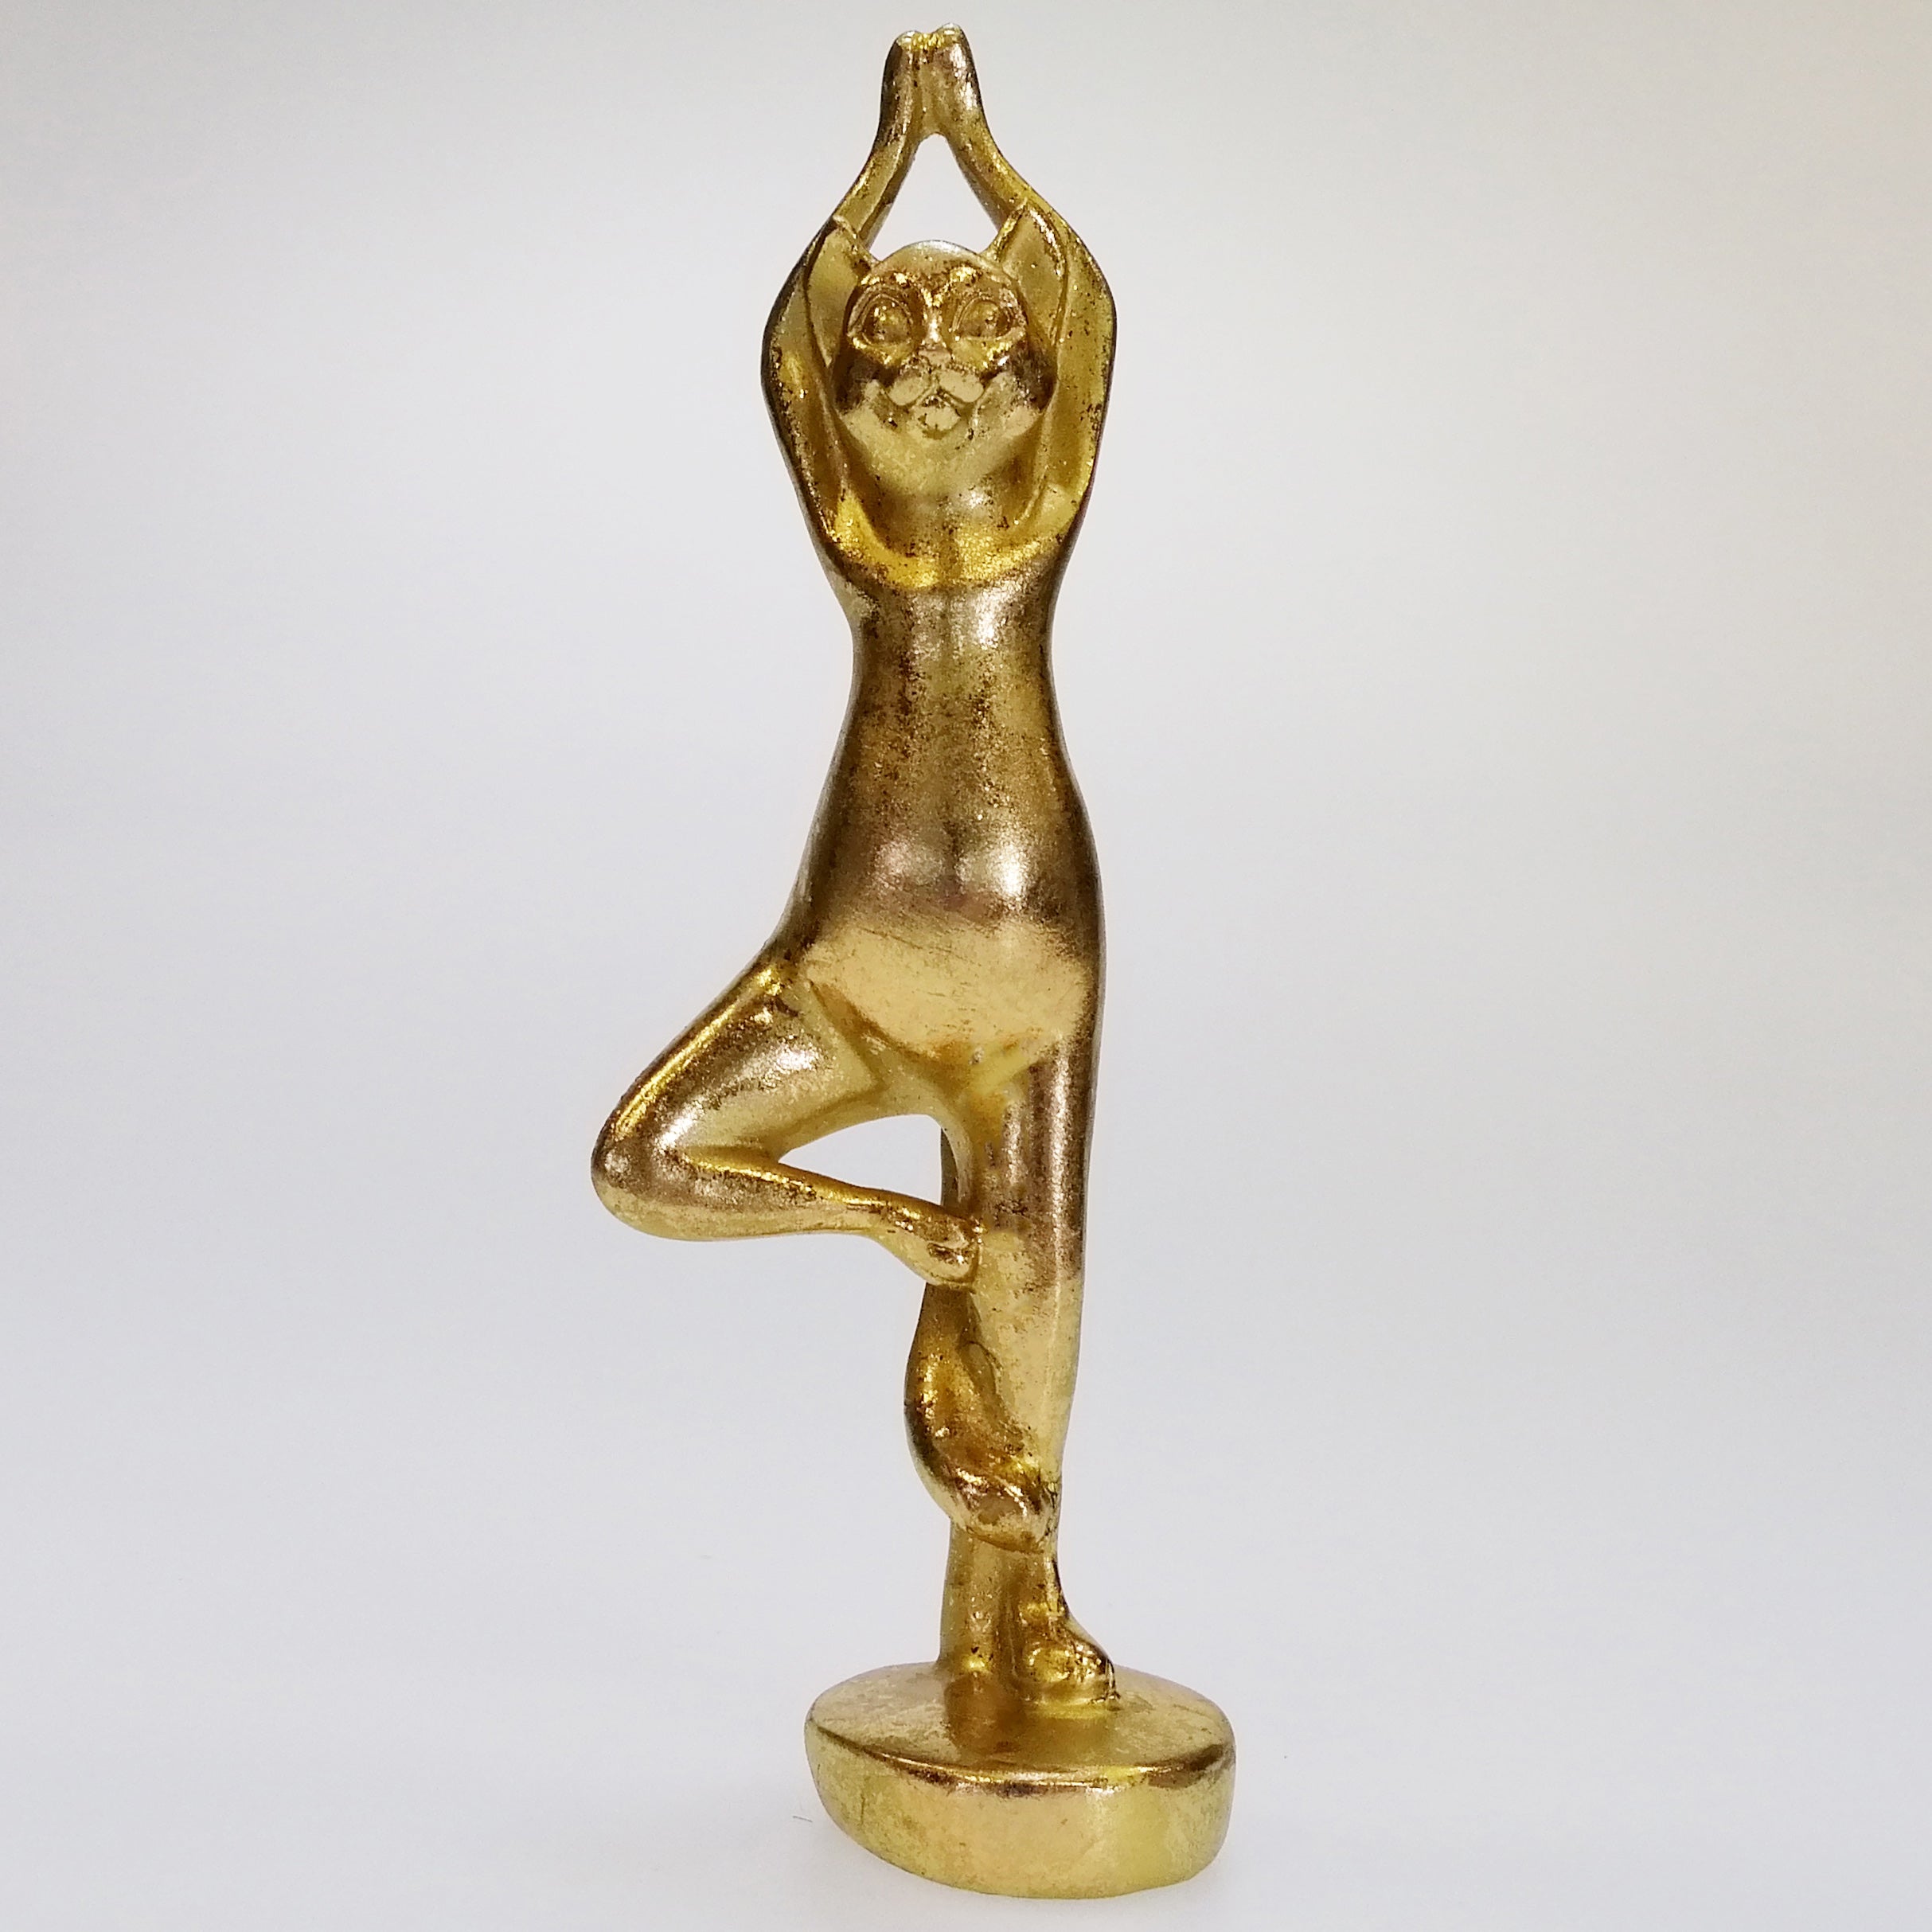 Painted Gold Yoga Cat - Balance